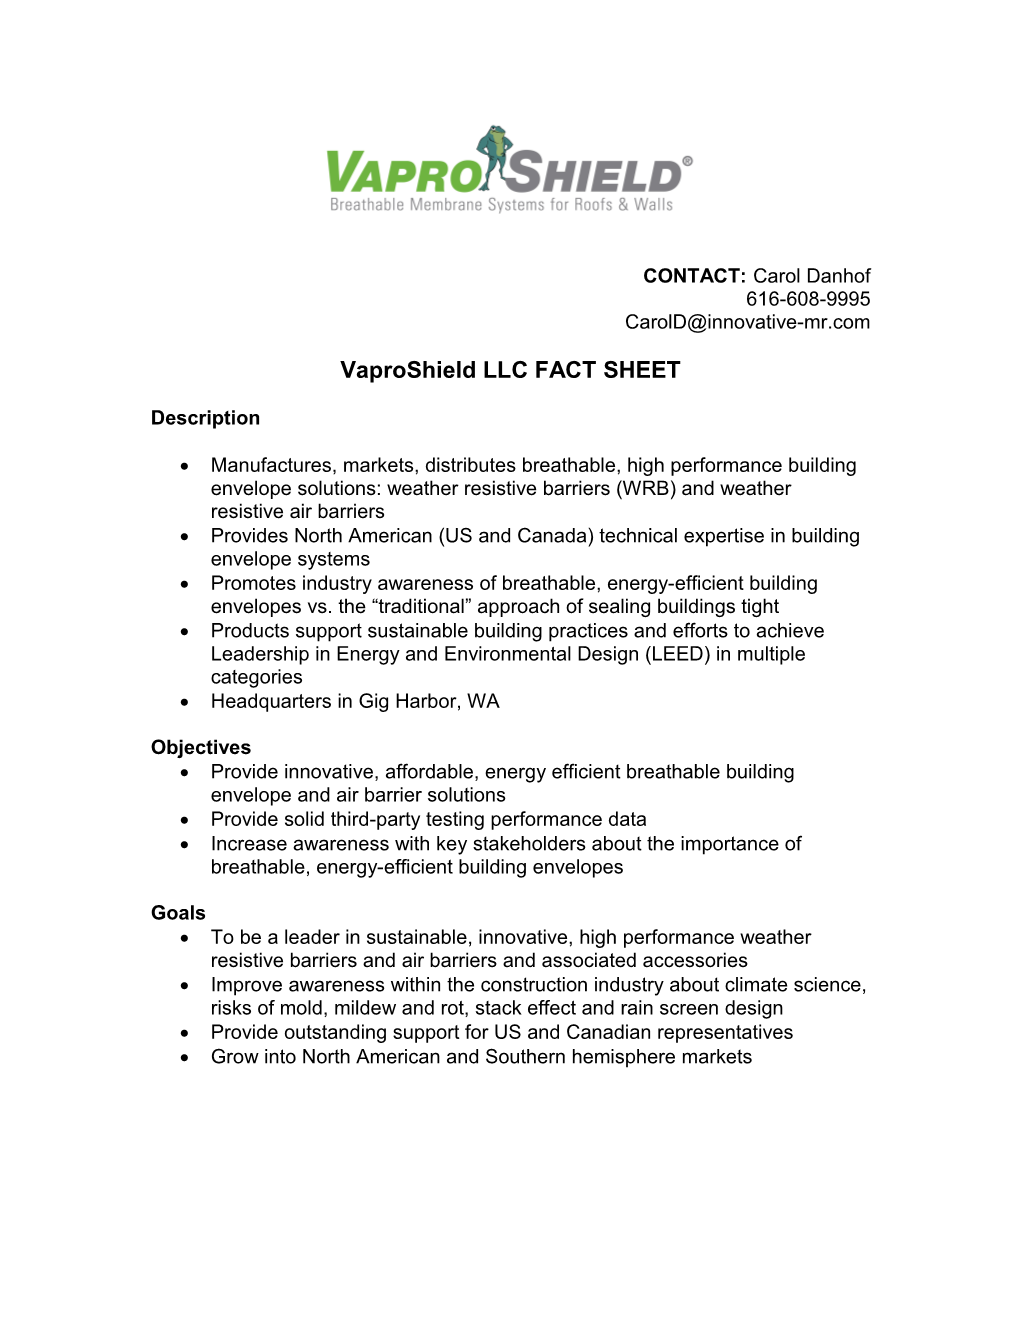 Vaproshield LLC FACT SHEET